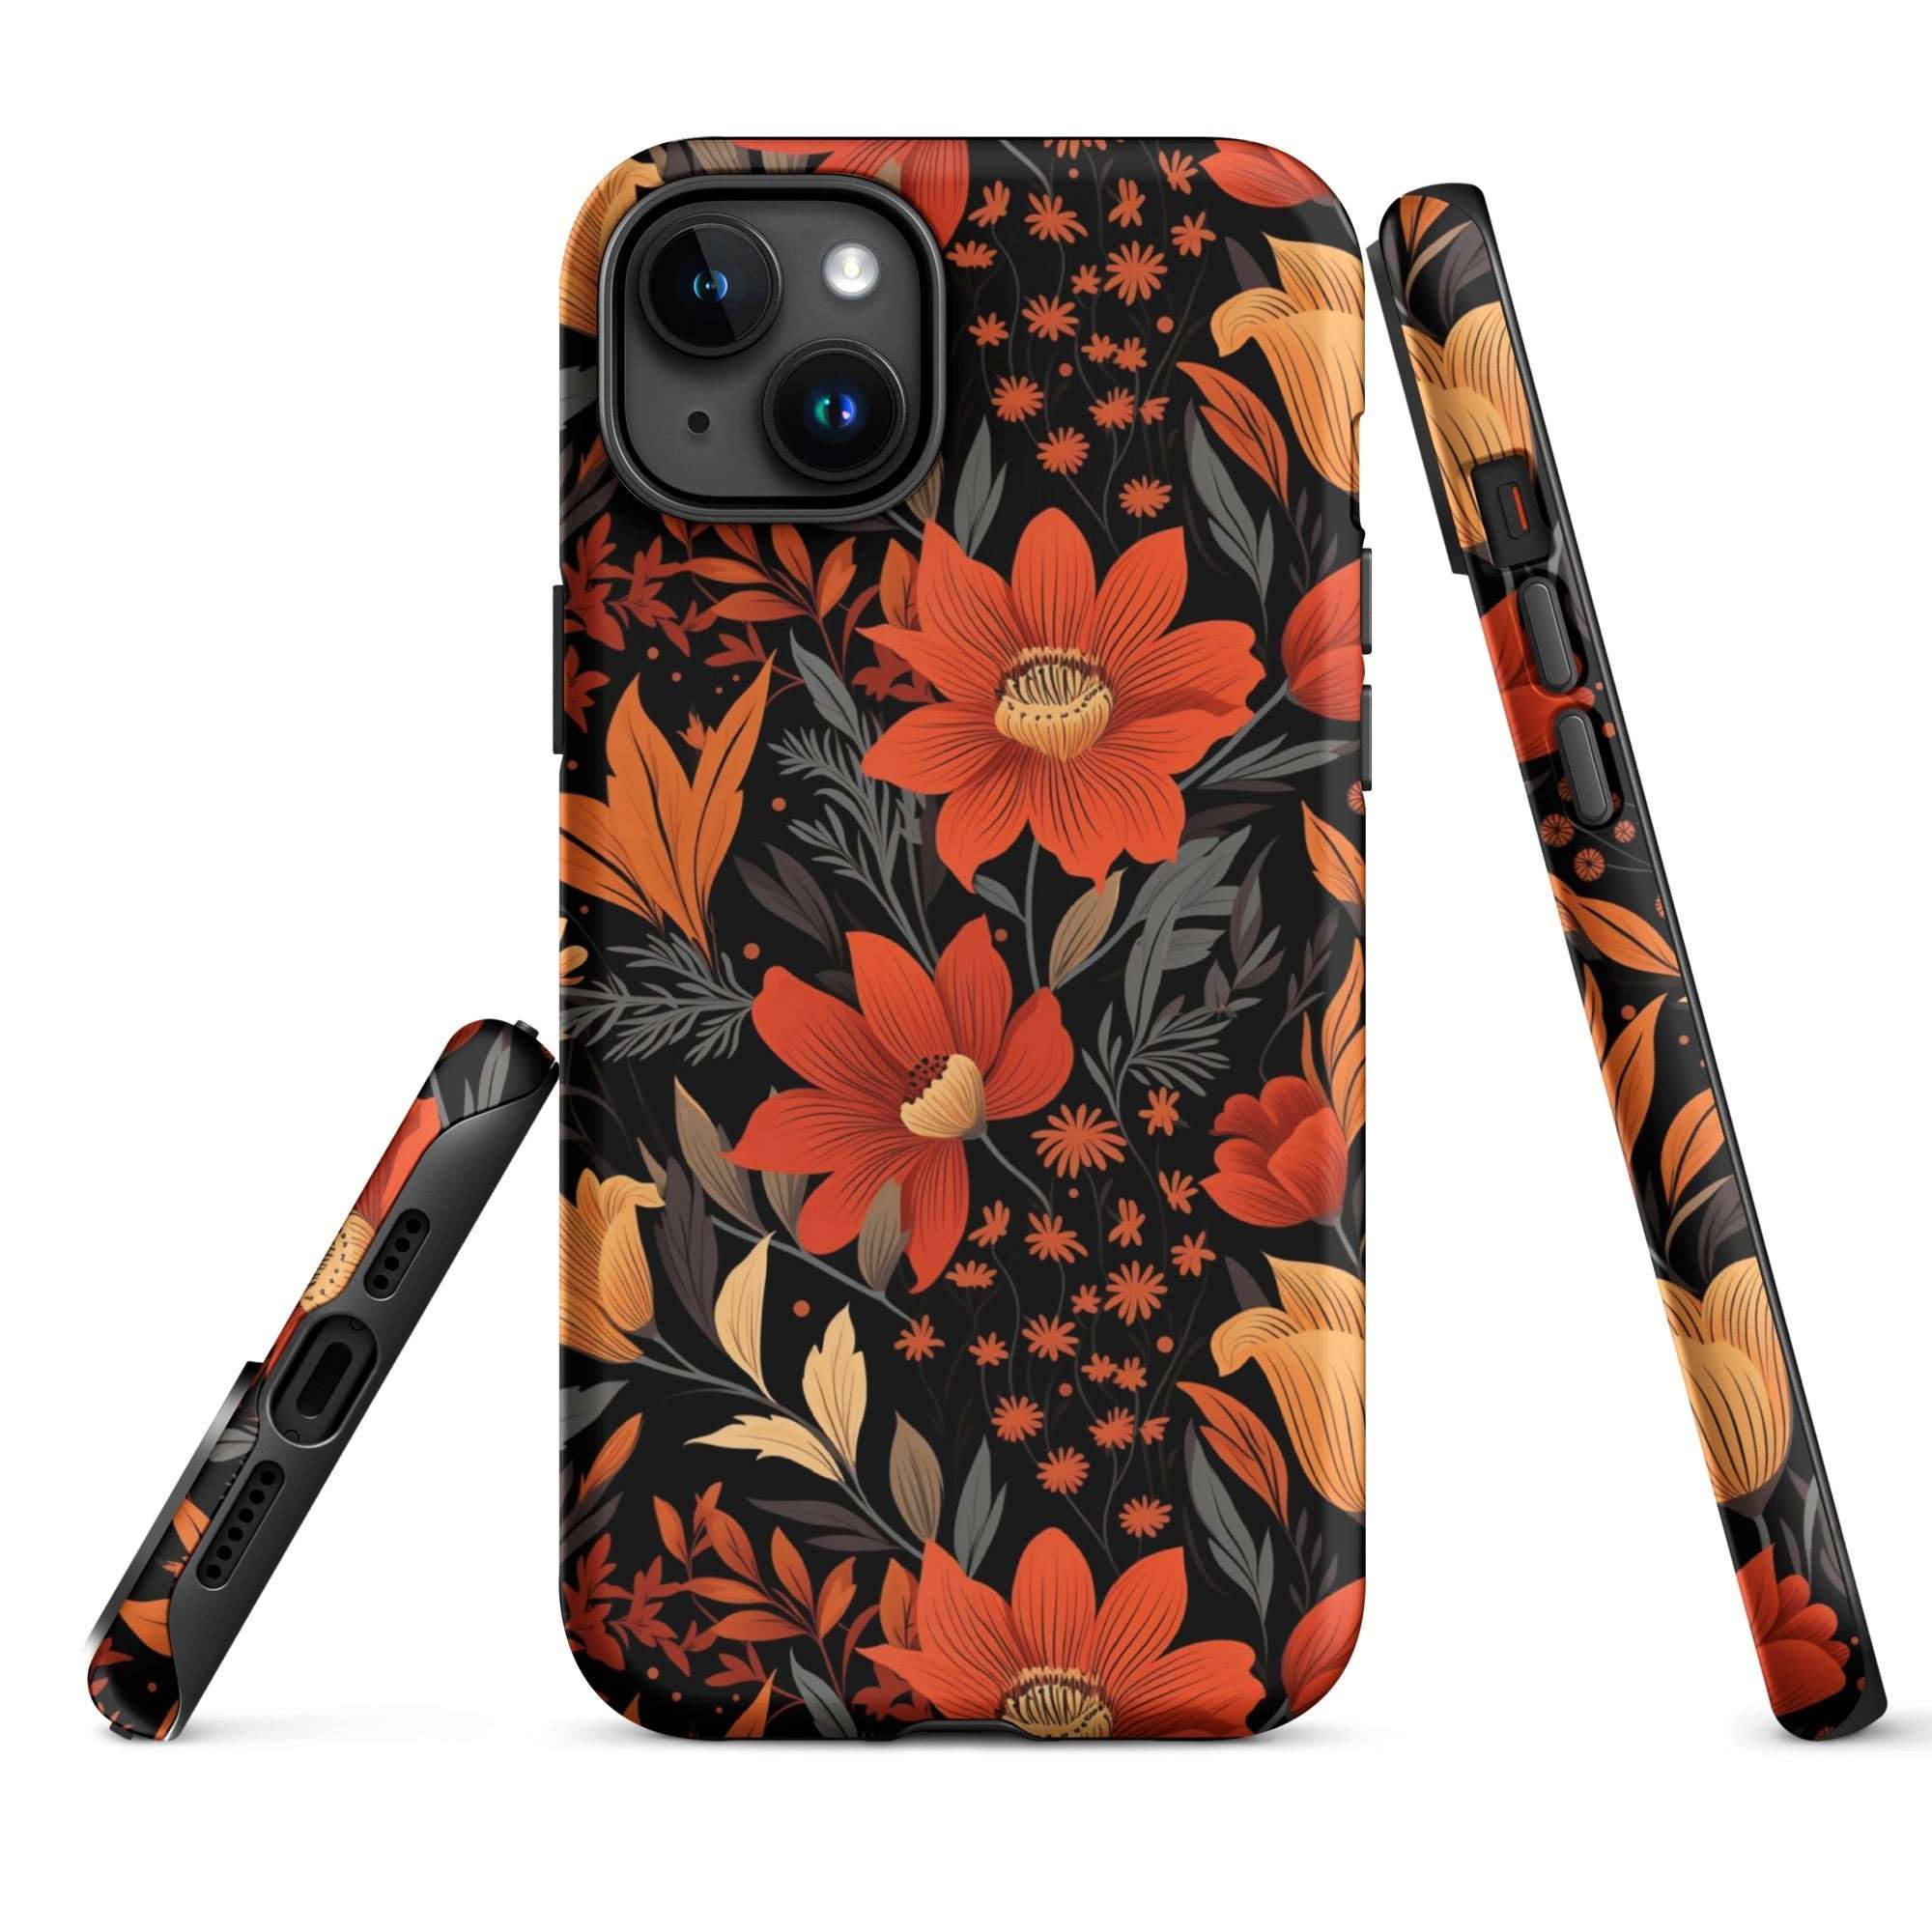 Autumn Blossom Noir - A Dark Floral Canvas - iPhone Case - Pattern Symphony